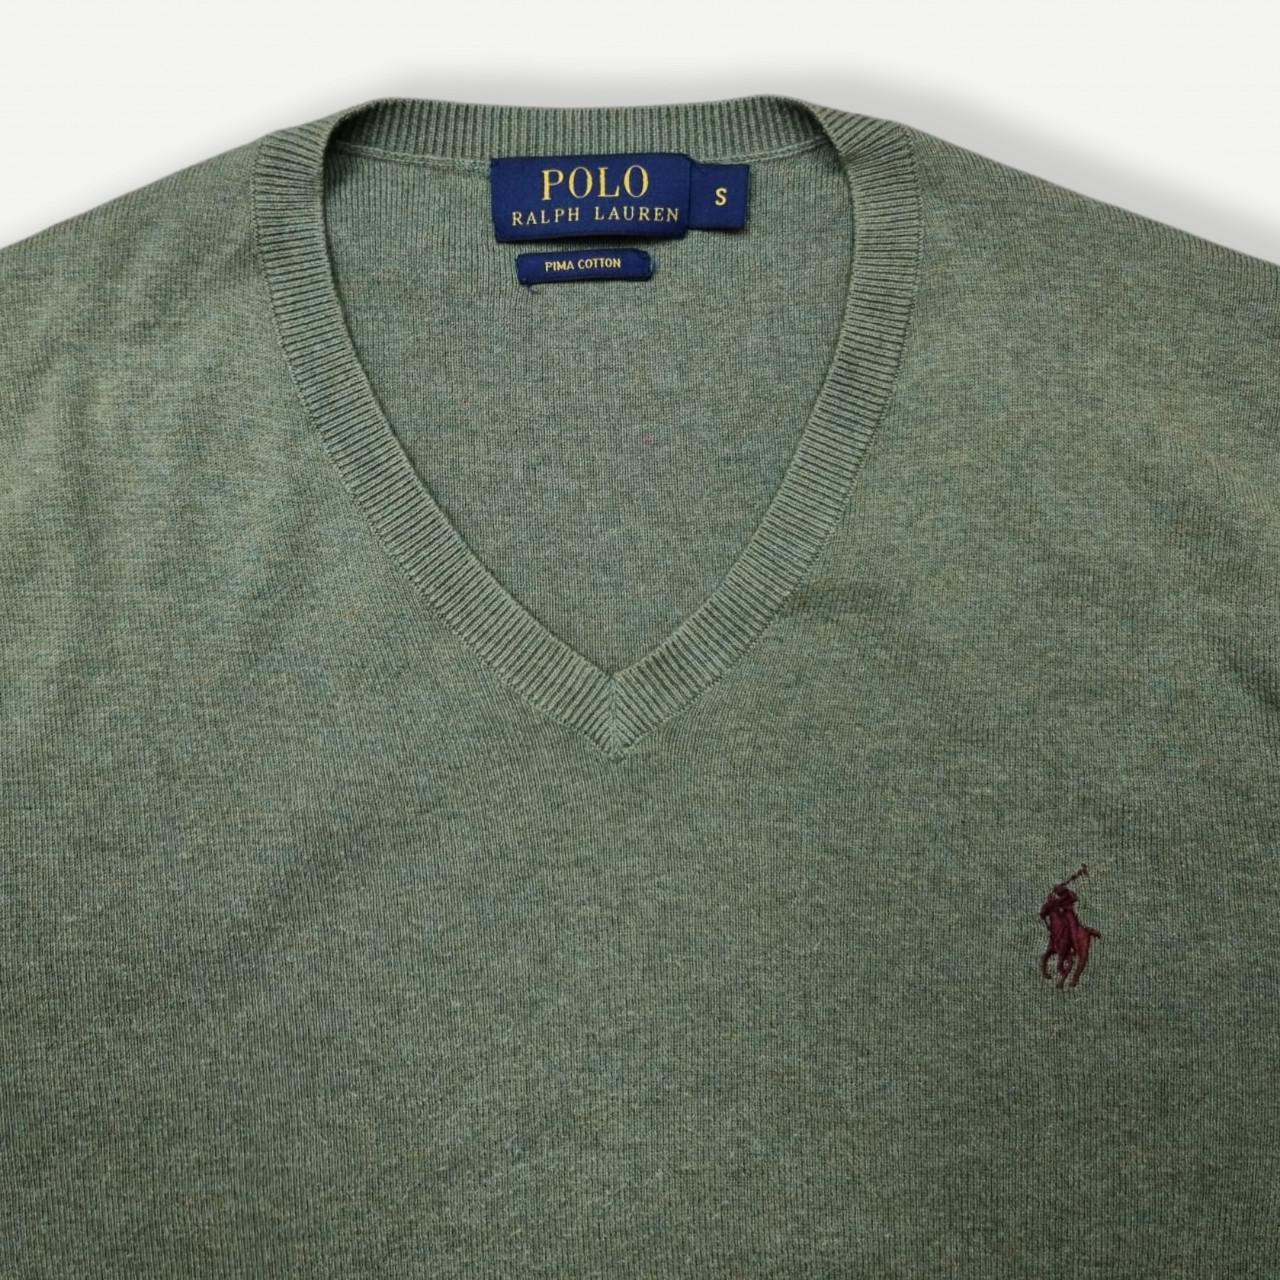 Vintage Ralph Lauren Polo Jumper Sage Green Knitted... - Depop